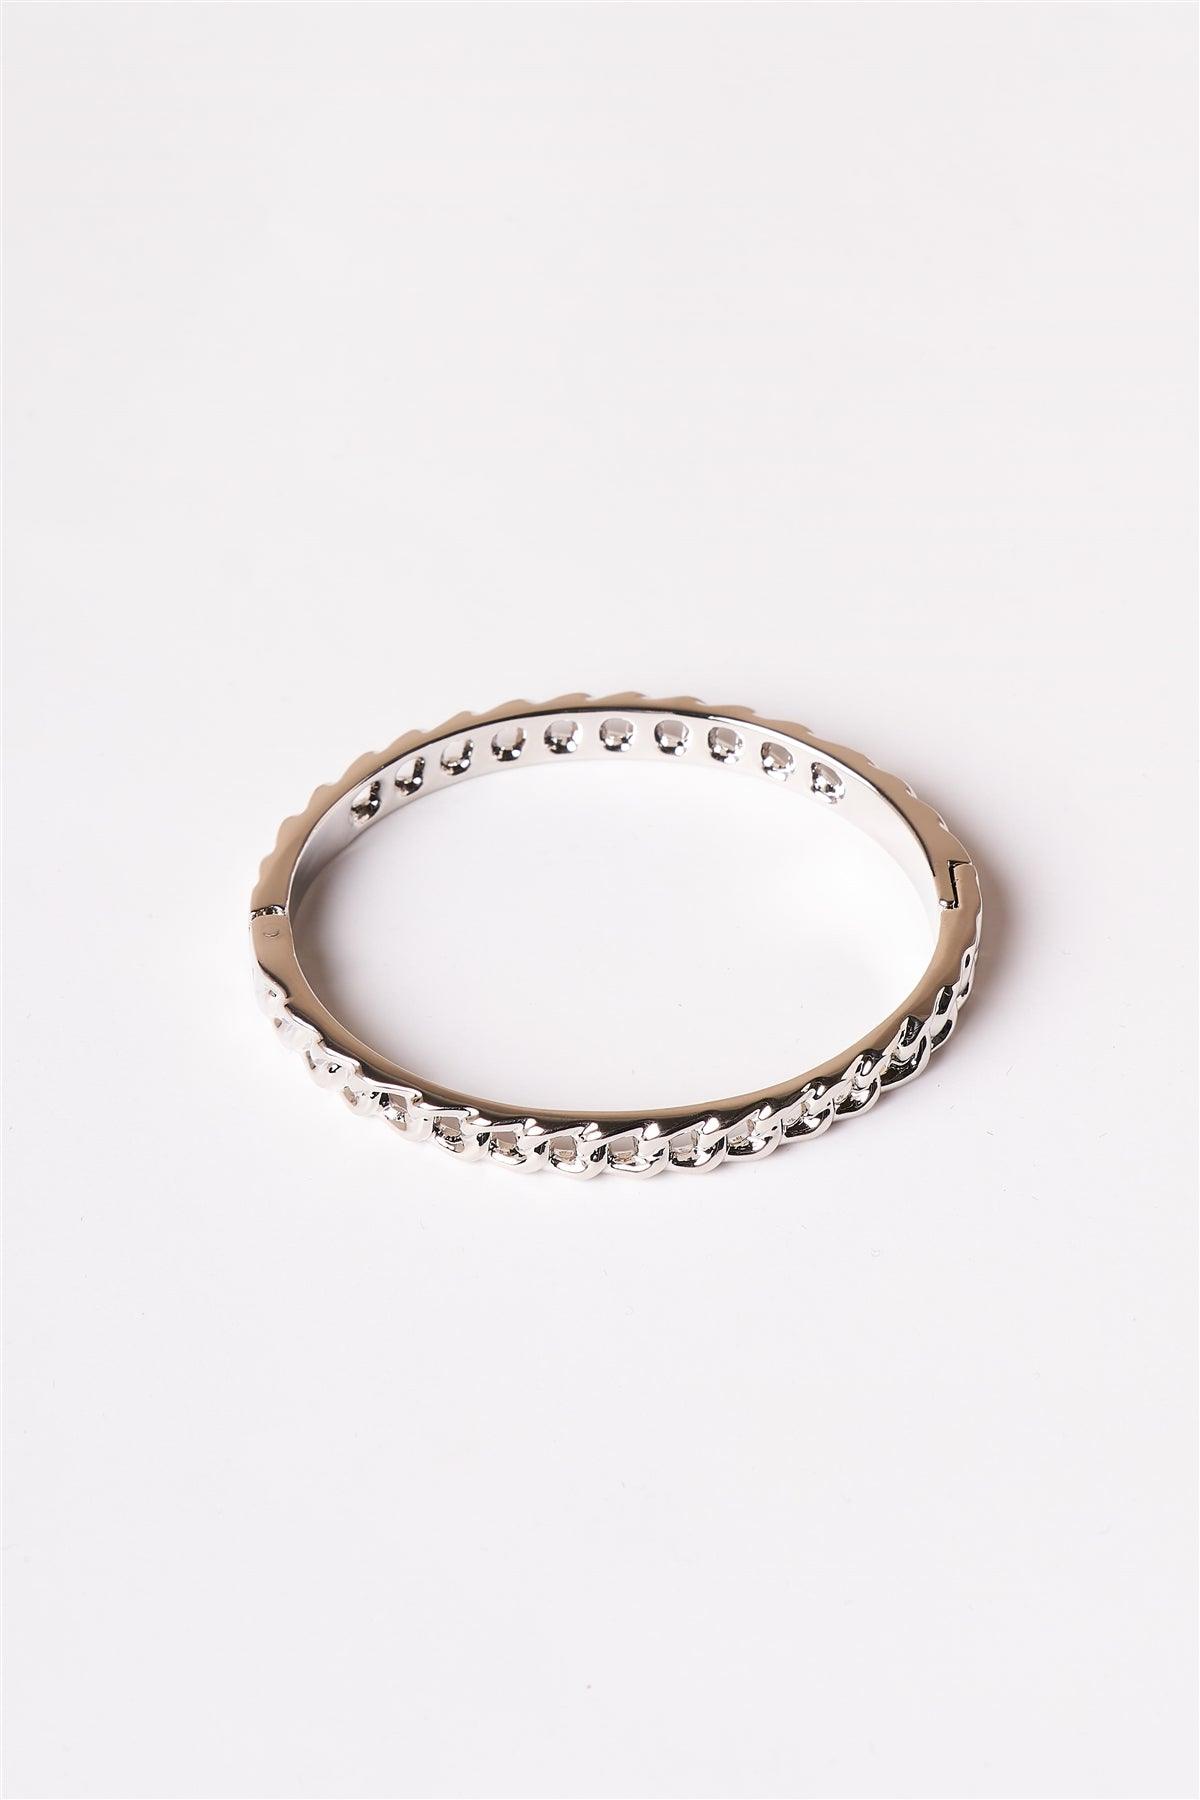 Silver Solid Chain Link Bangle Bracelet /6 Pieces